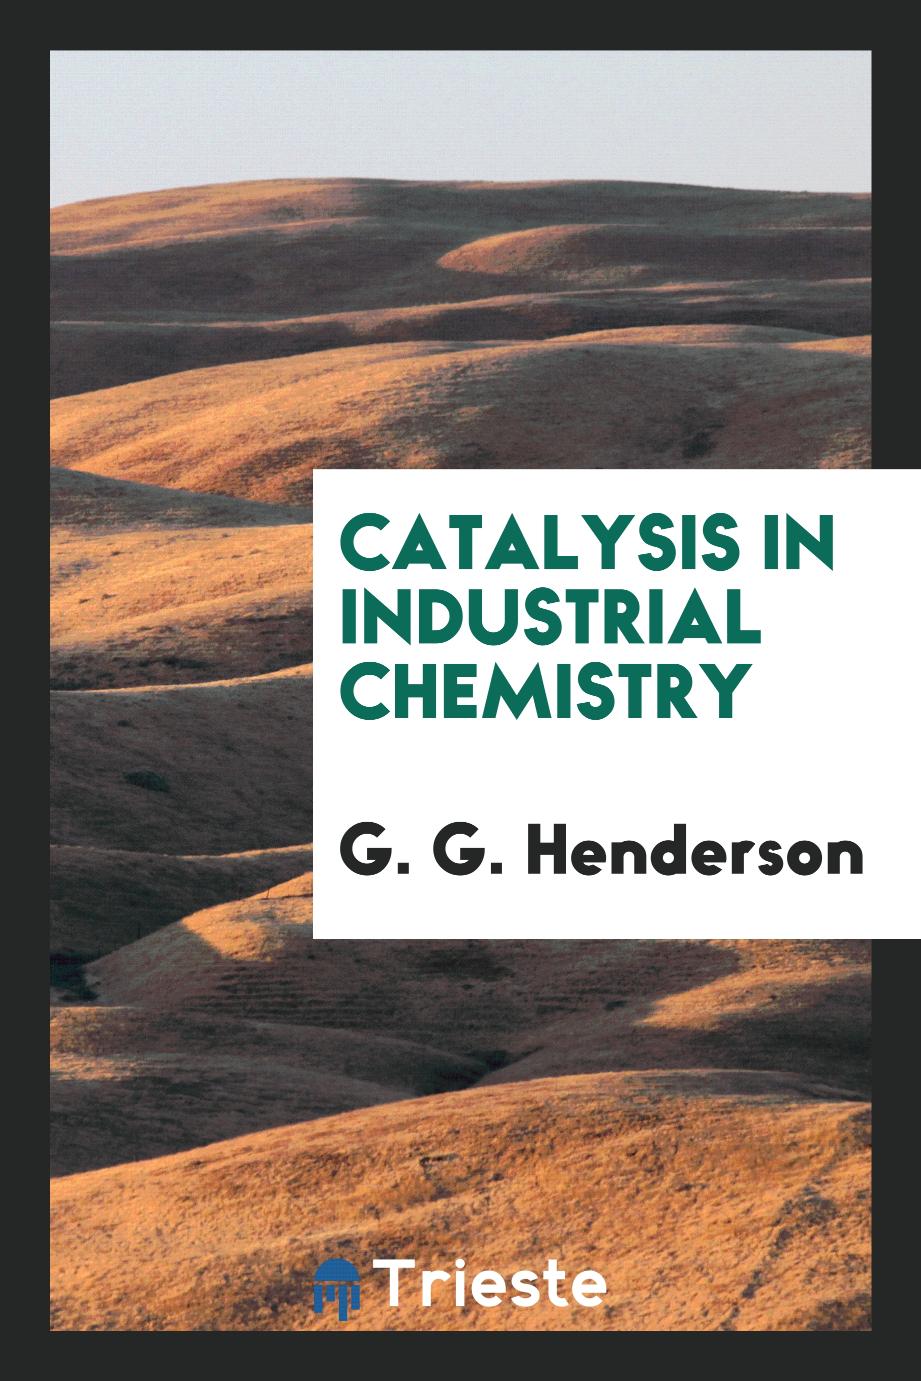 Catalysis in industrial chemistry